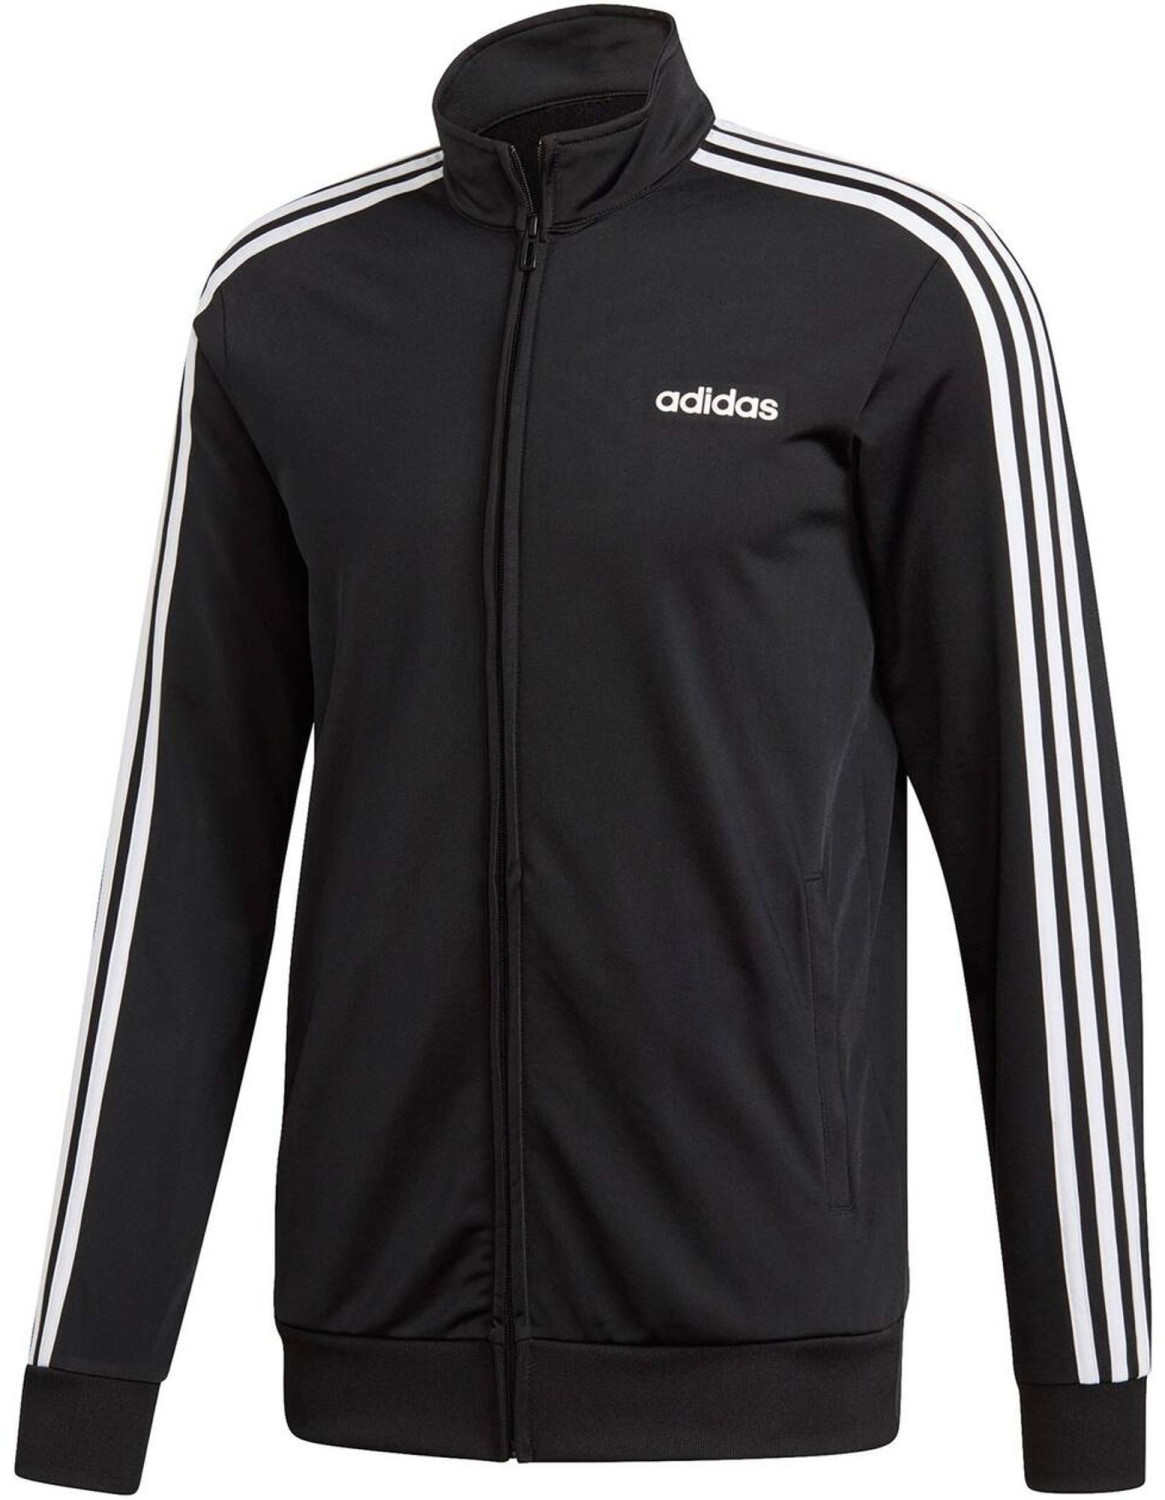 Adidas Essentials 3-Stripes Track Top black/white